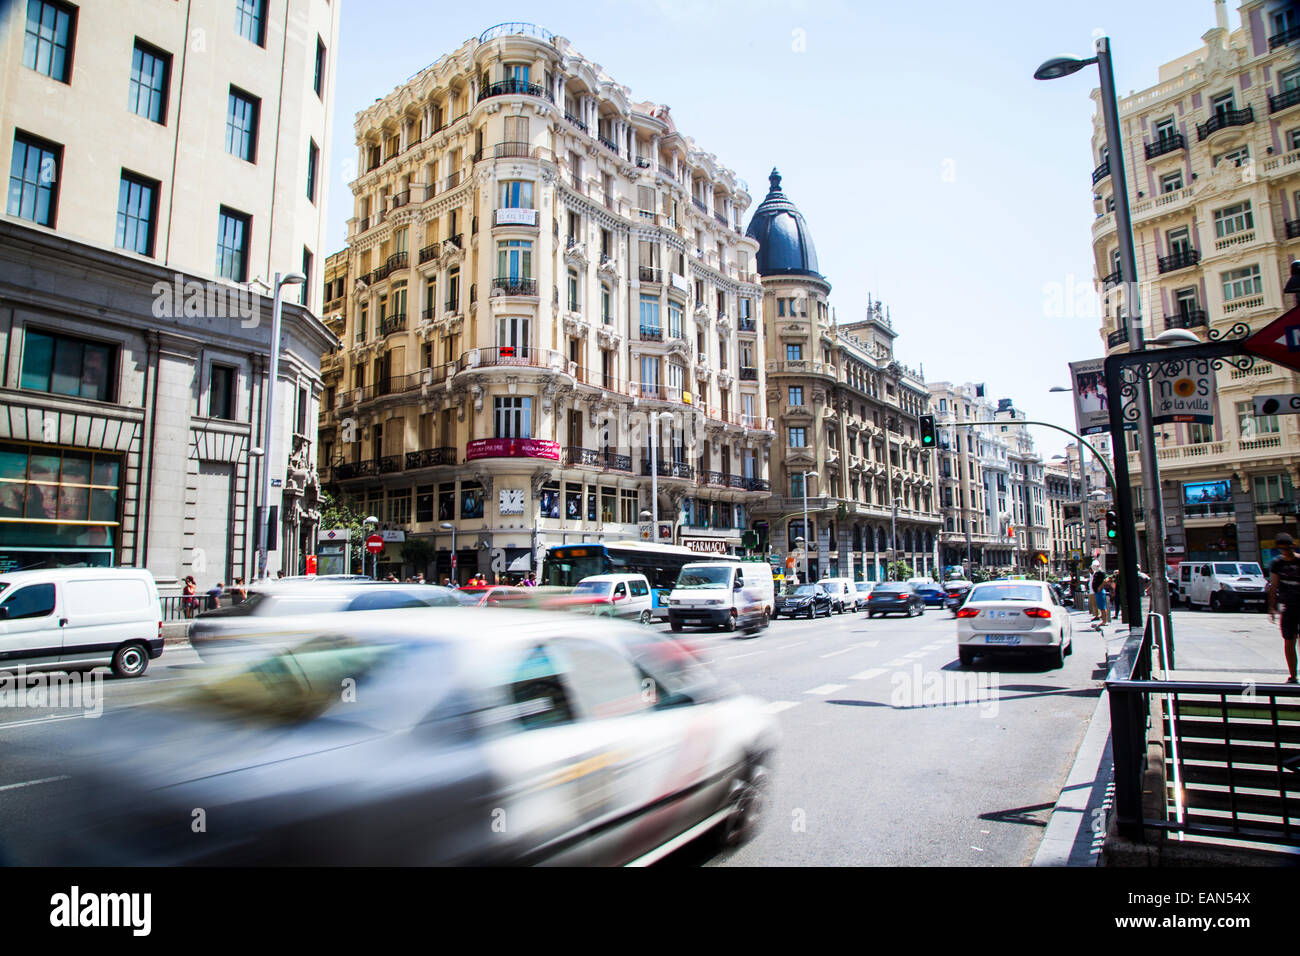 Vue sur la Gran Via, principale rue commerçante de Madrid Banque D'Images